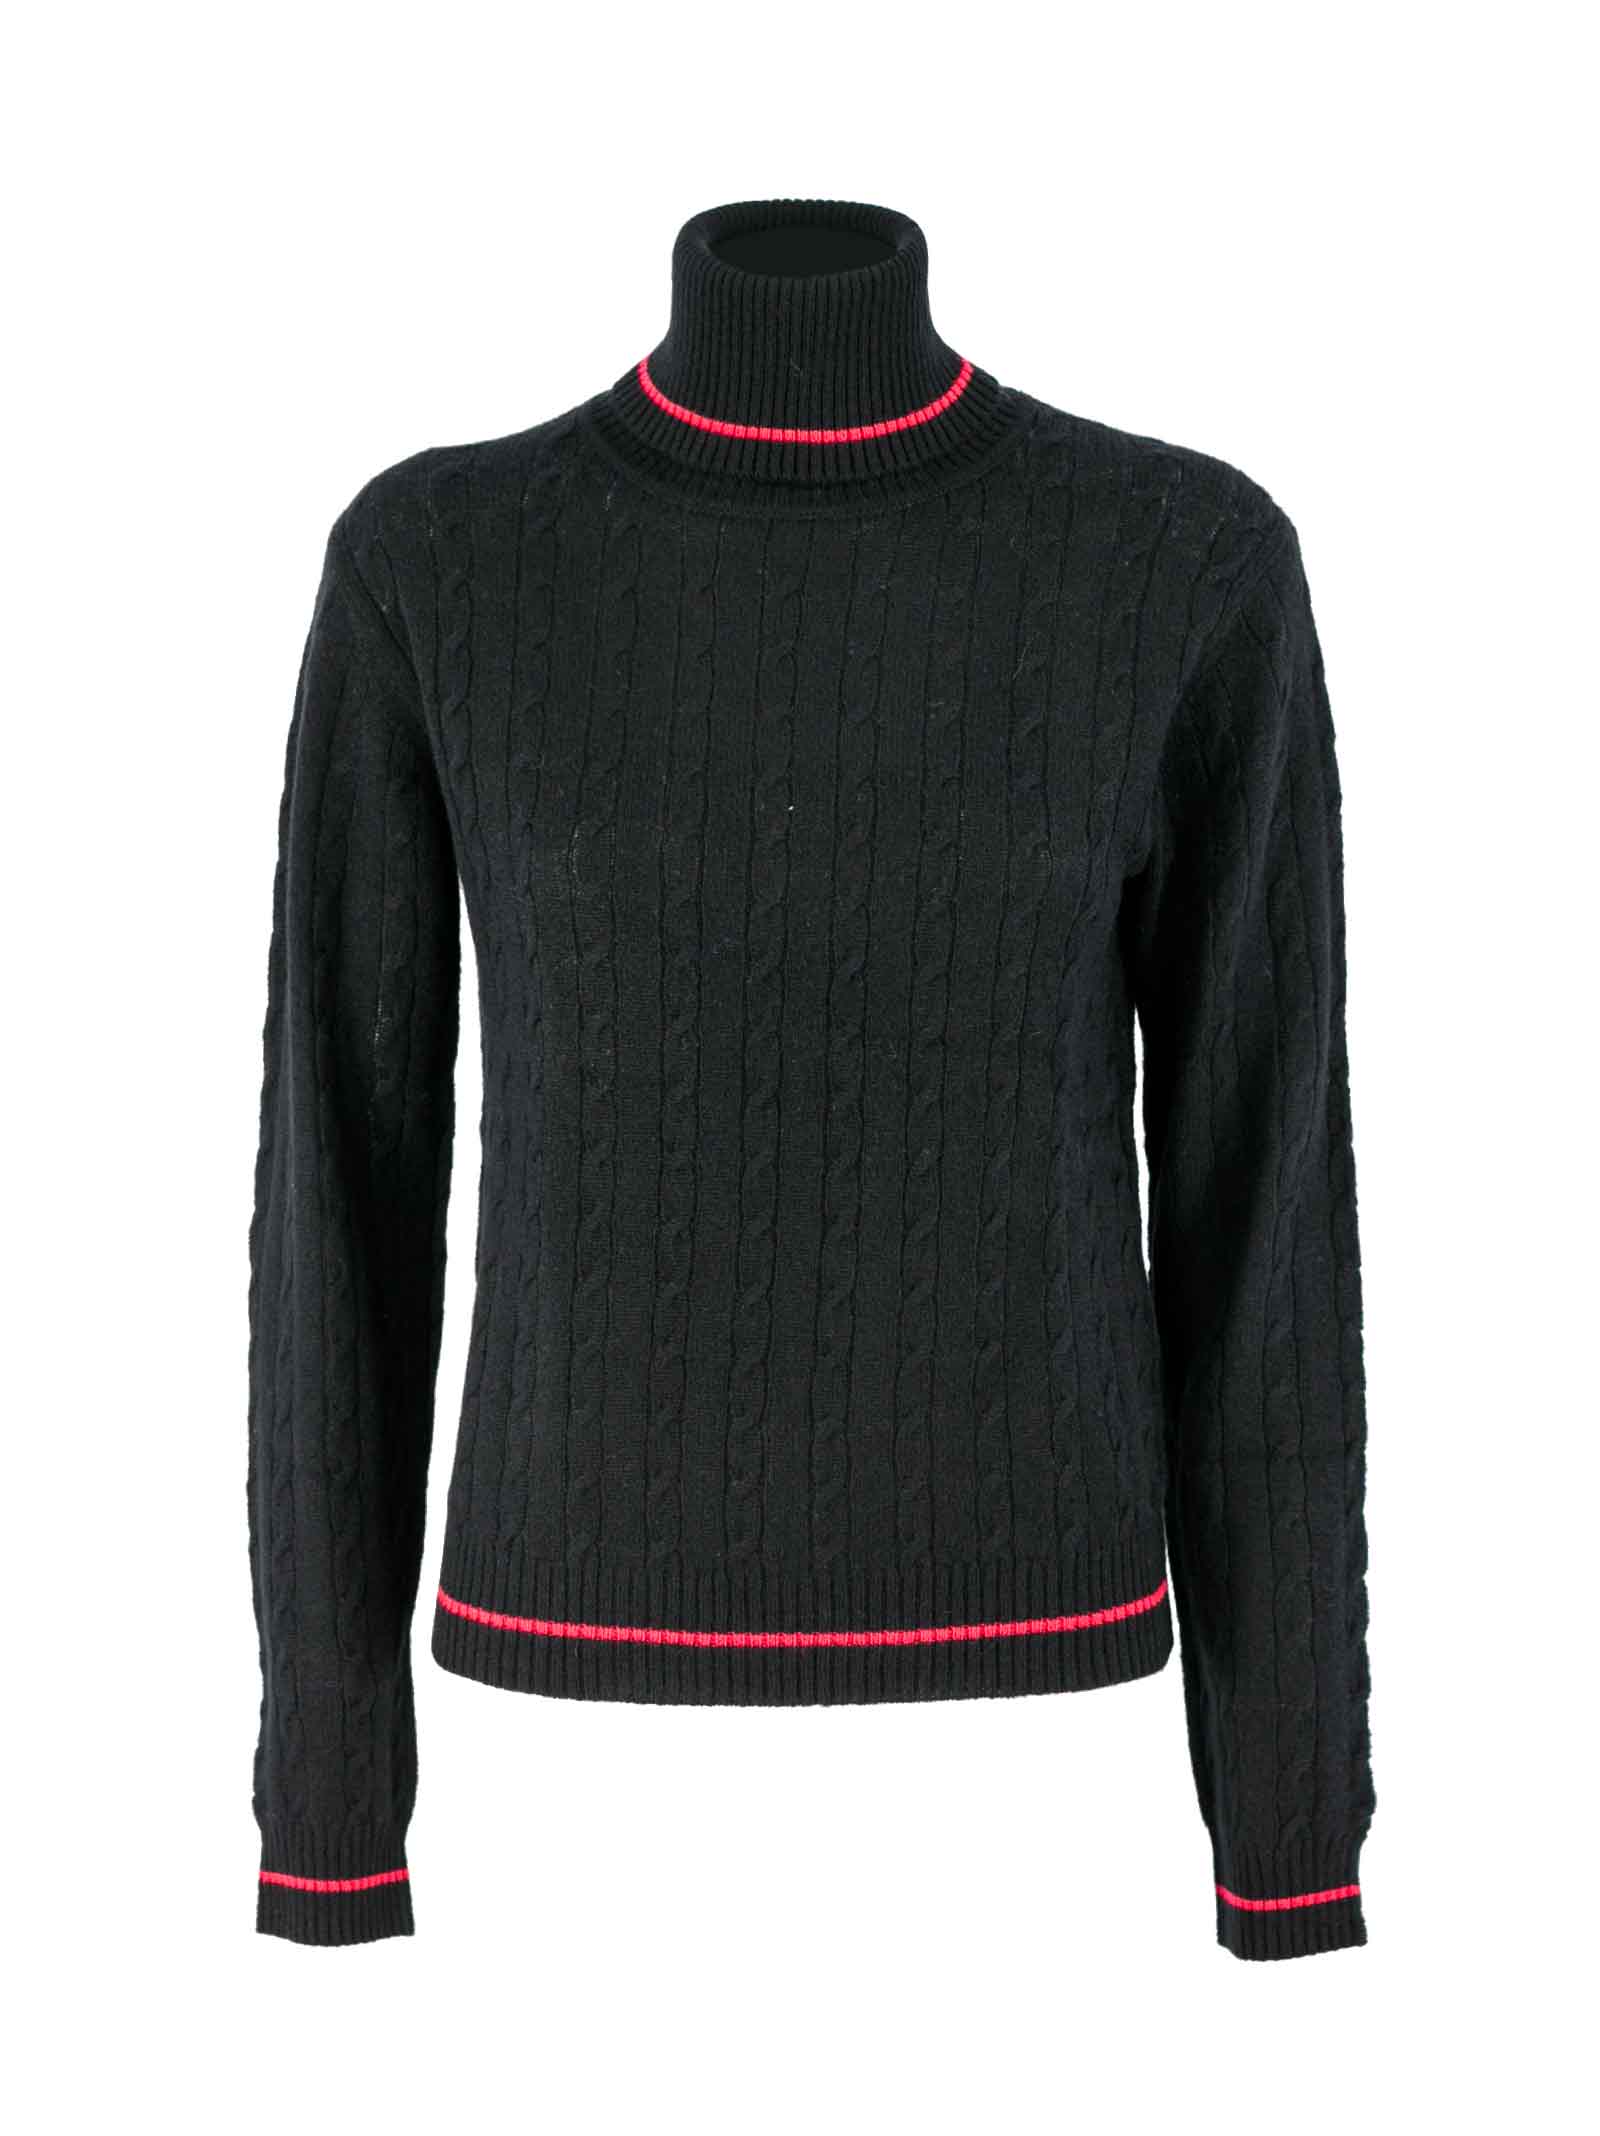 Parosh Cashmere Blend Sweater